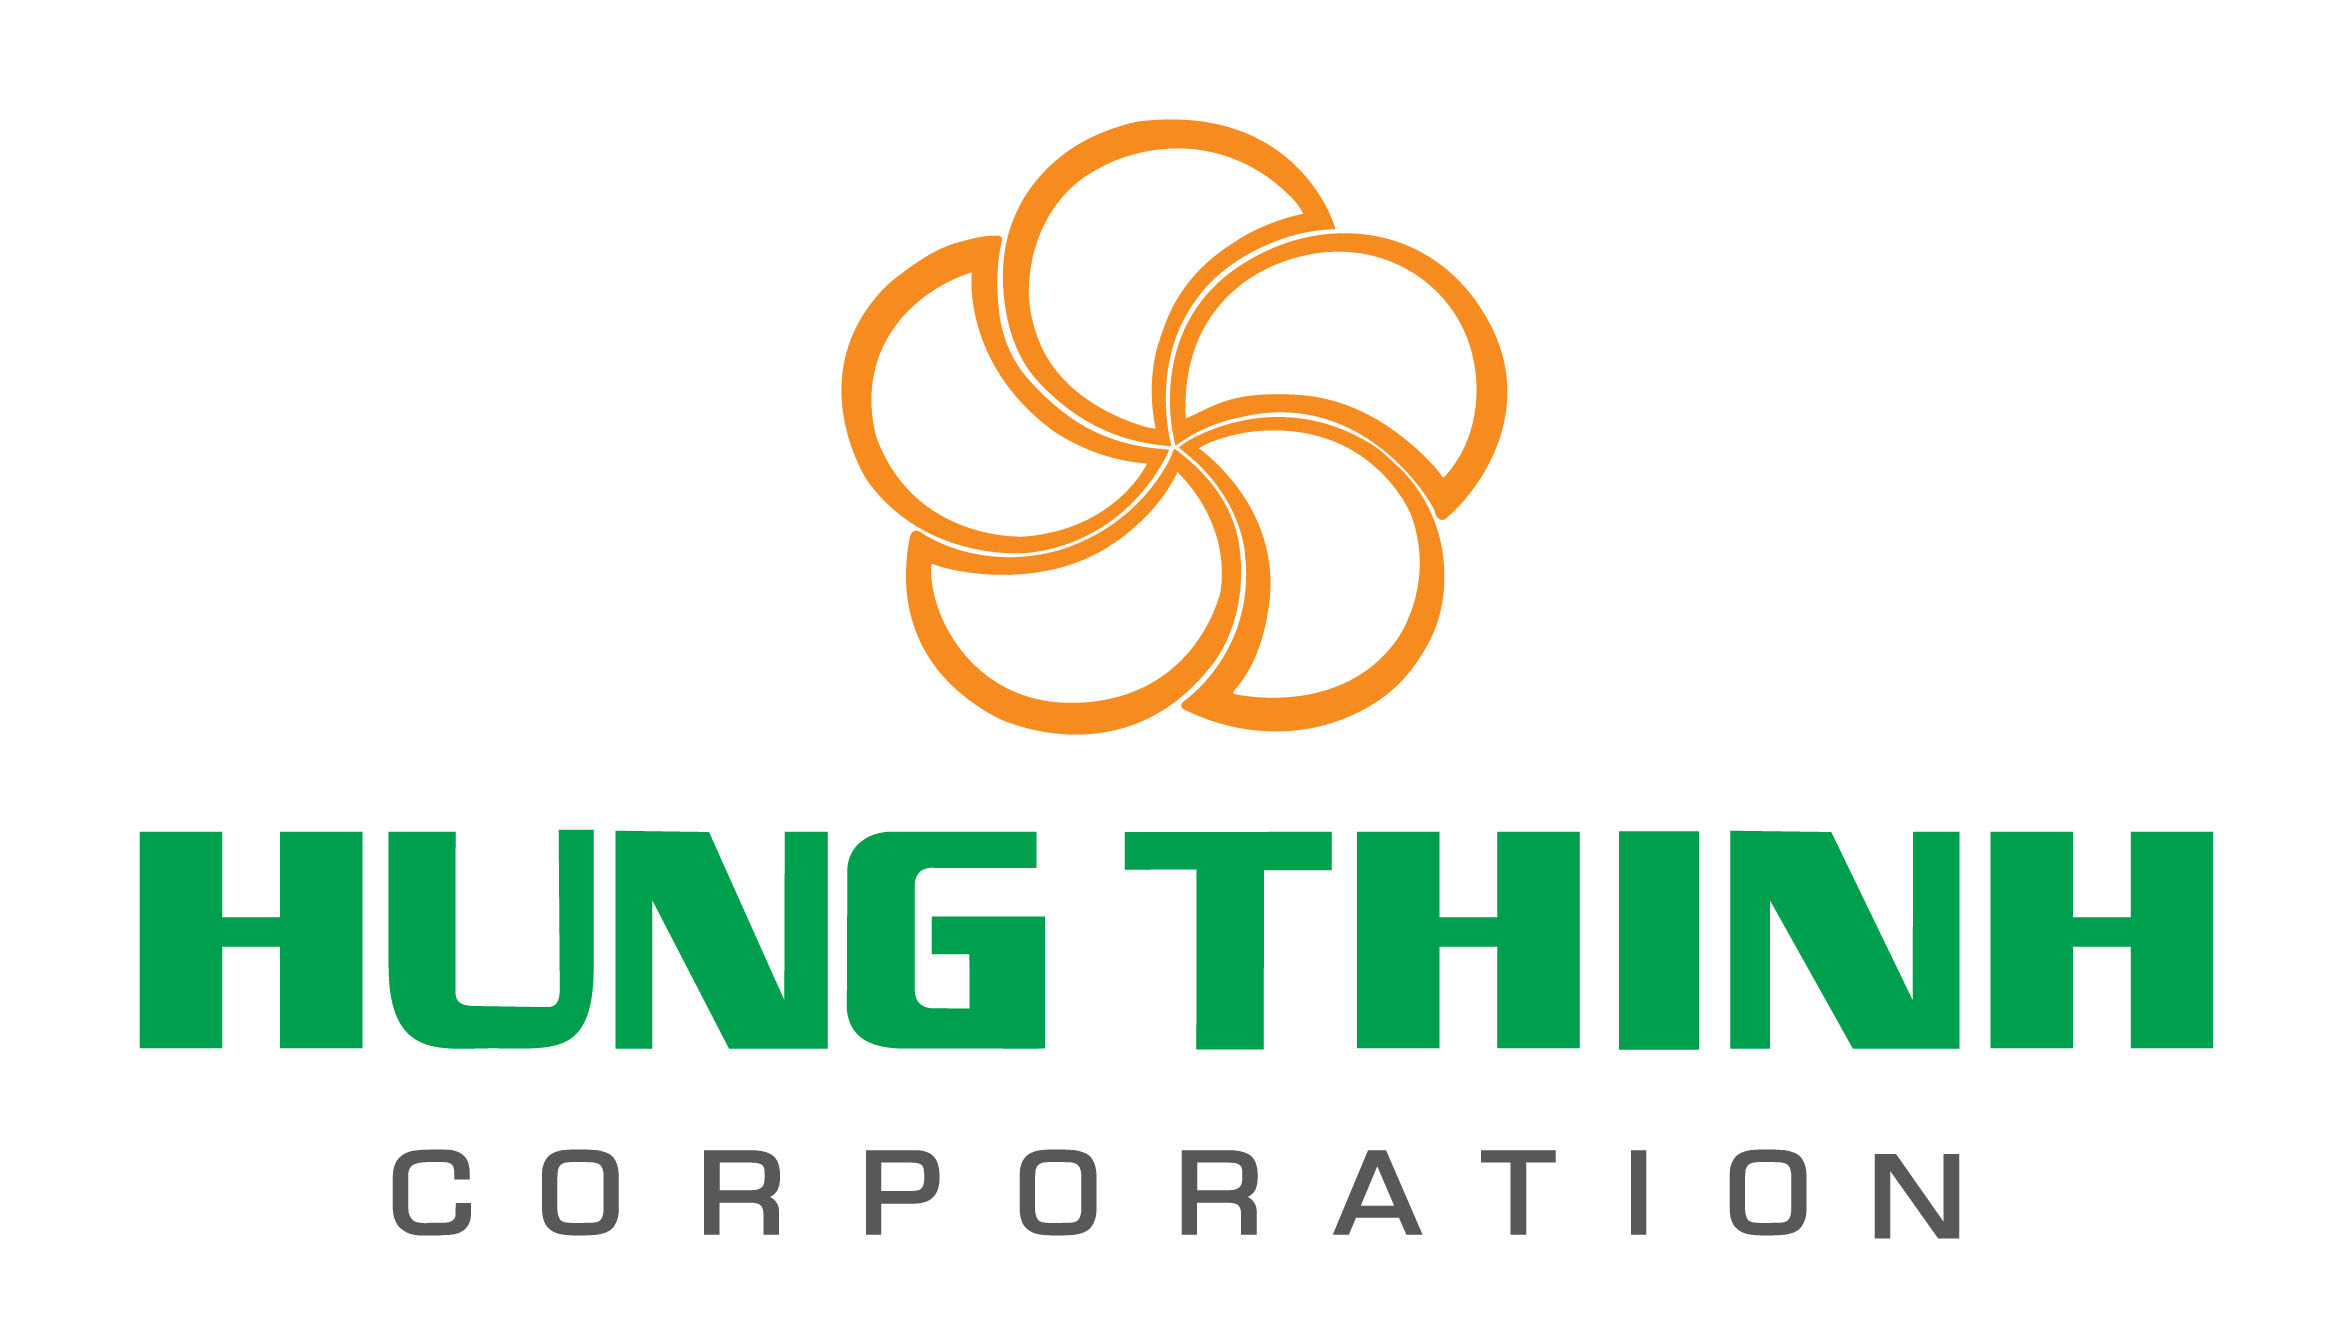 Hung Thinh Corp